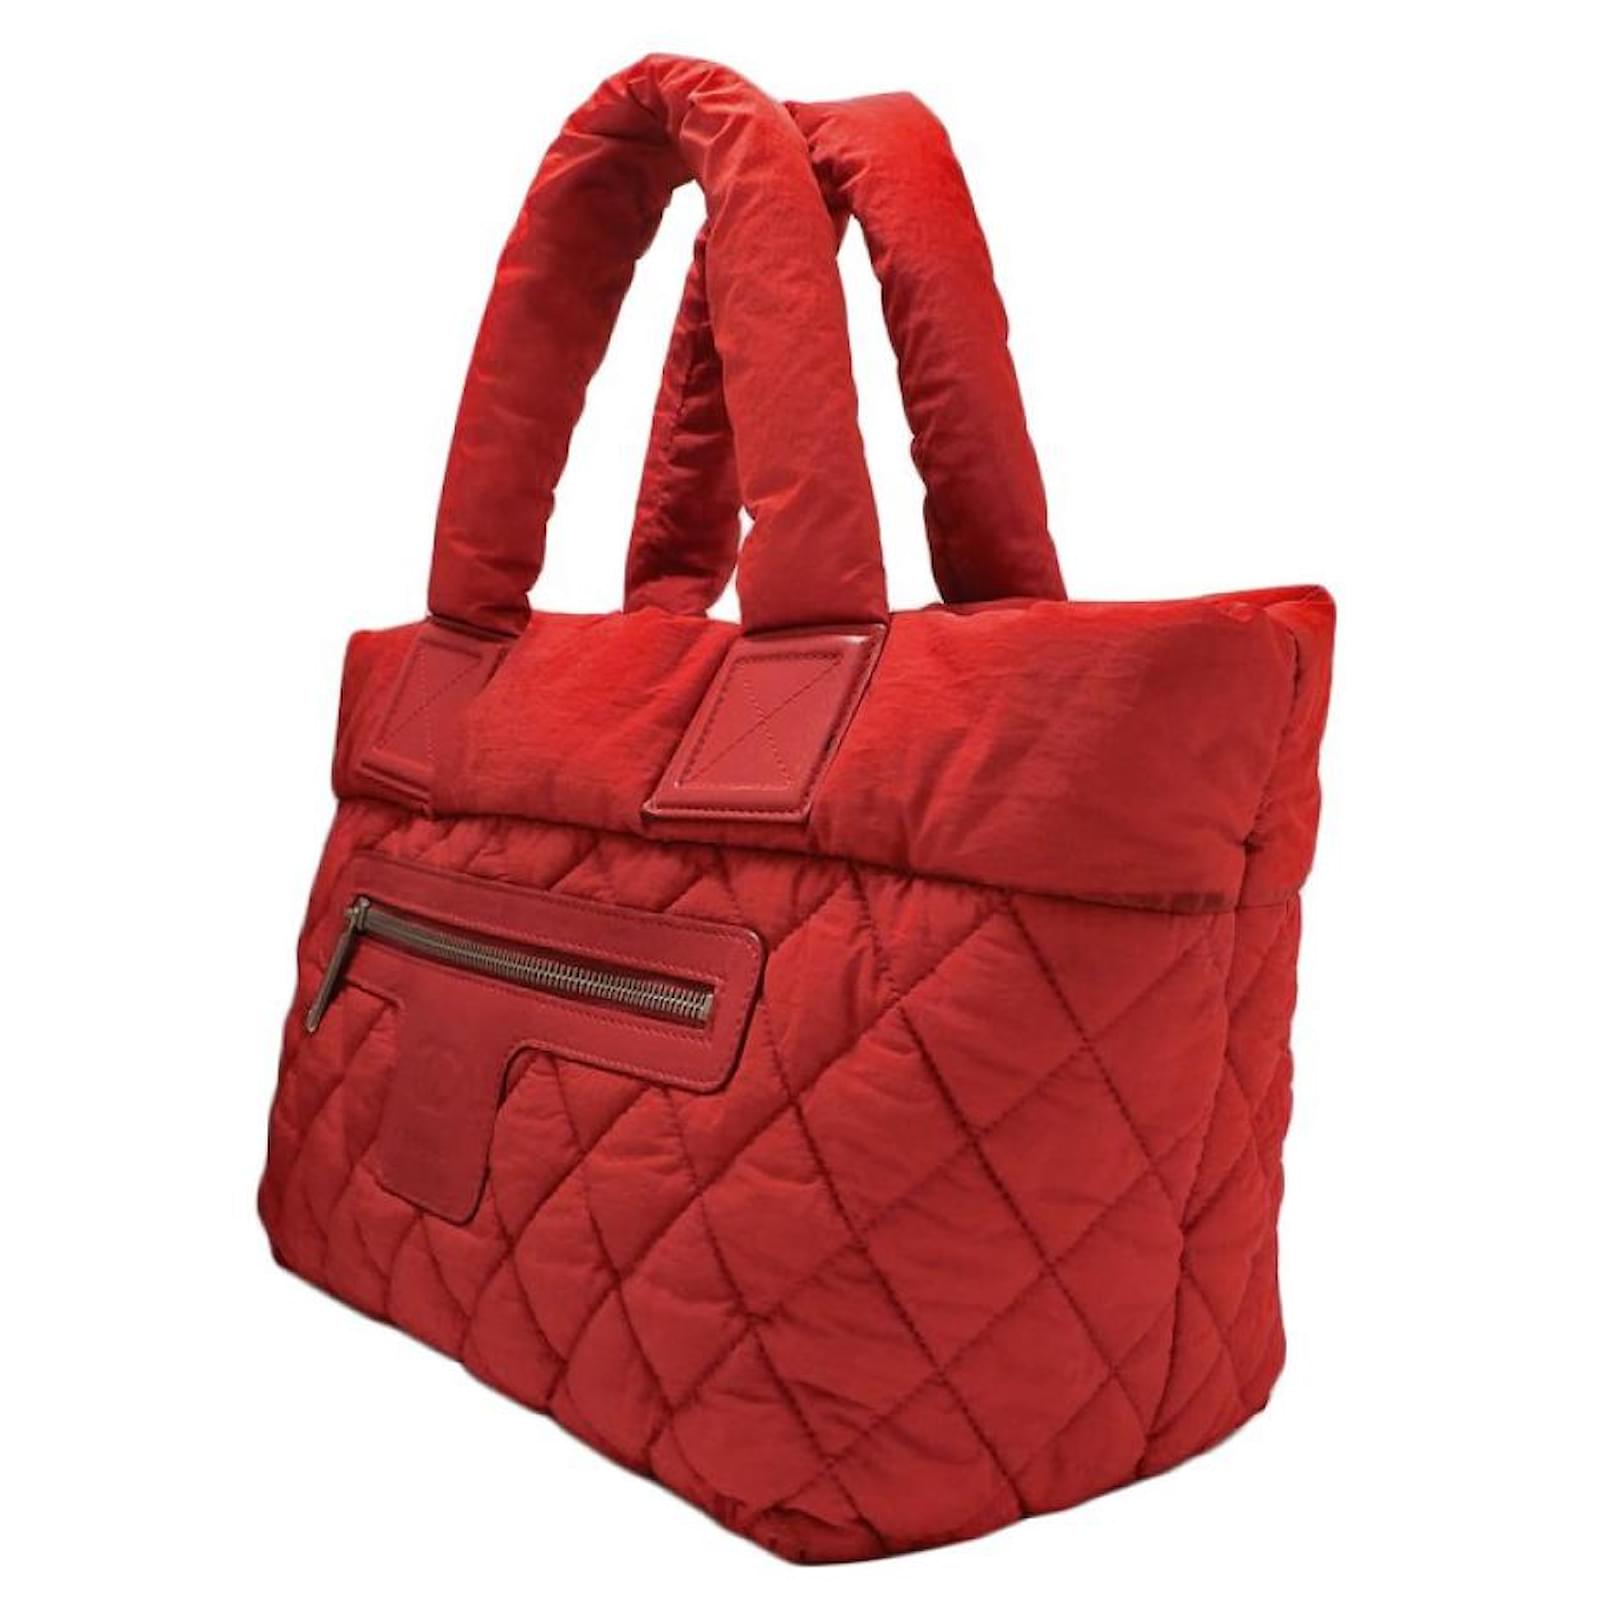 Used] Chanel Coco Cocoon Tote PM Tote Bag Handbag Reversible